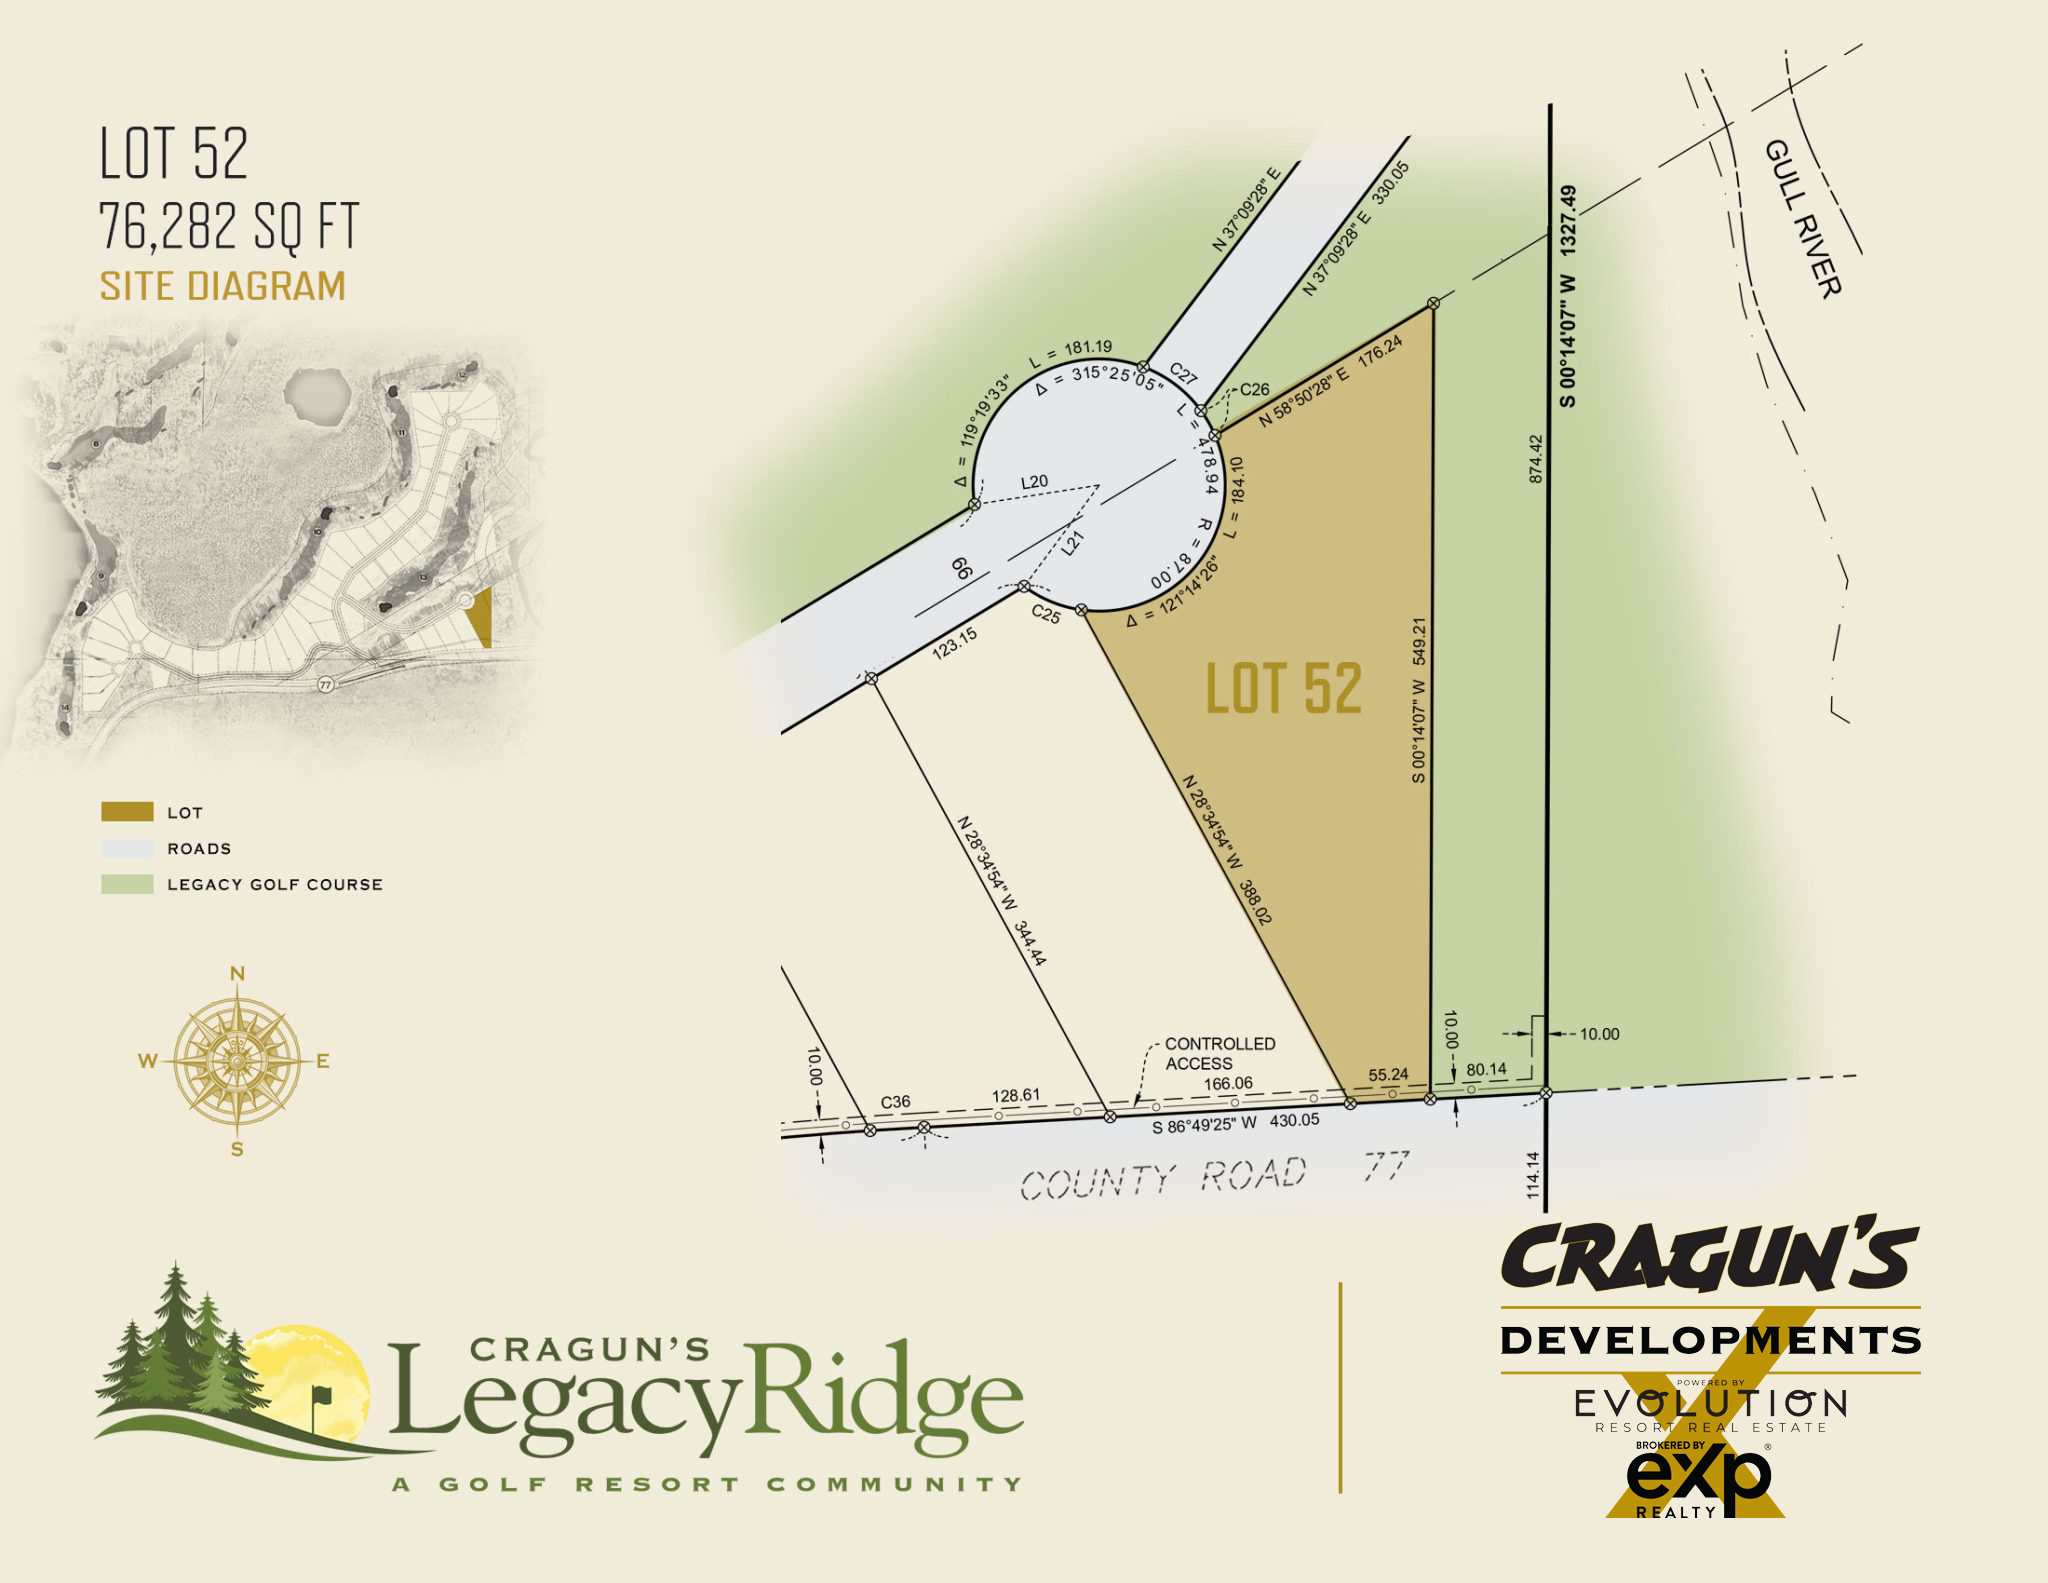 Legacy Ridge Lot 52 at Cragun's Developments in Brainerd, MN